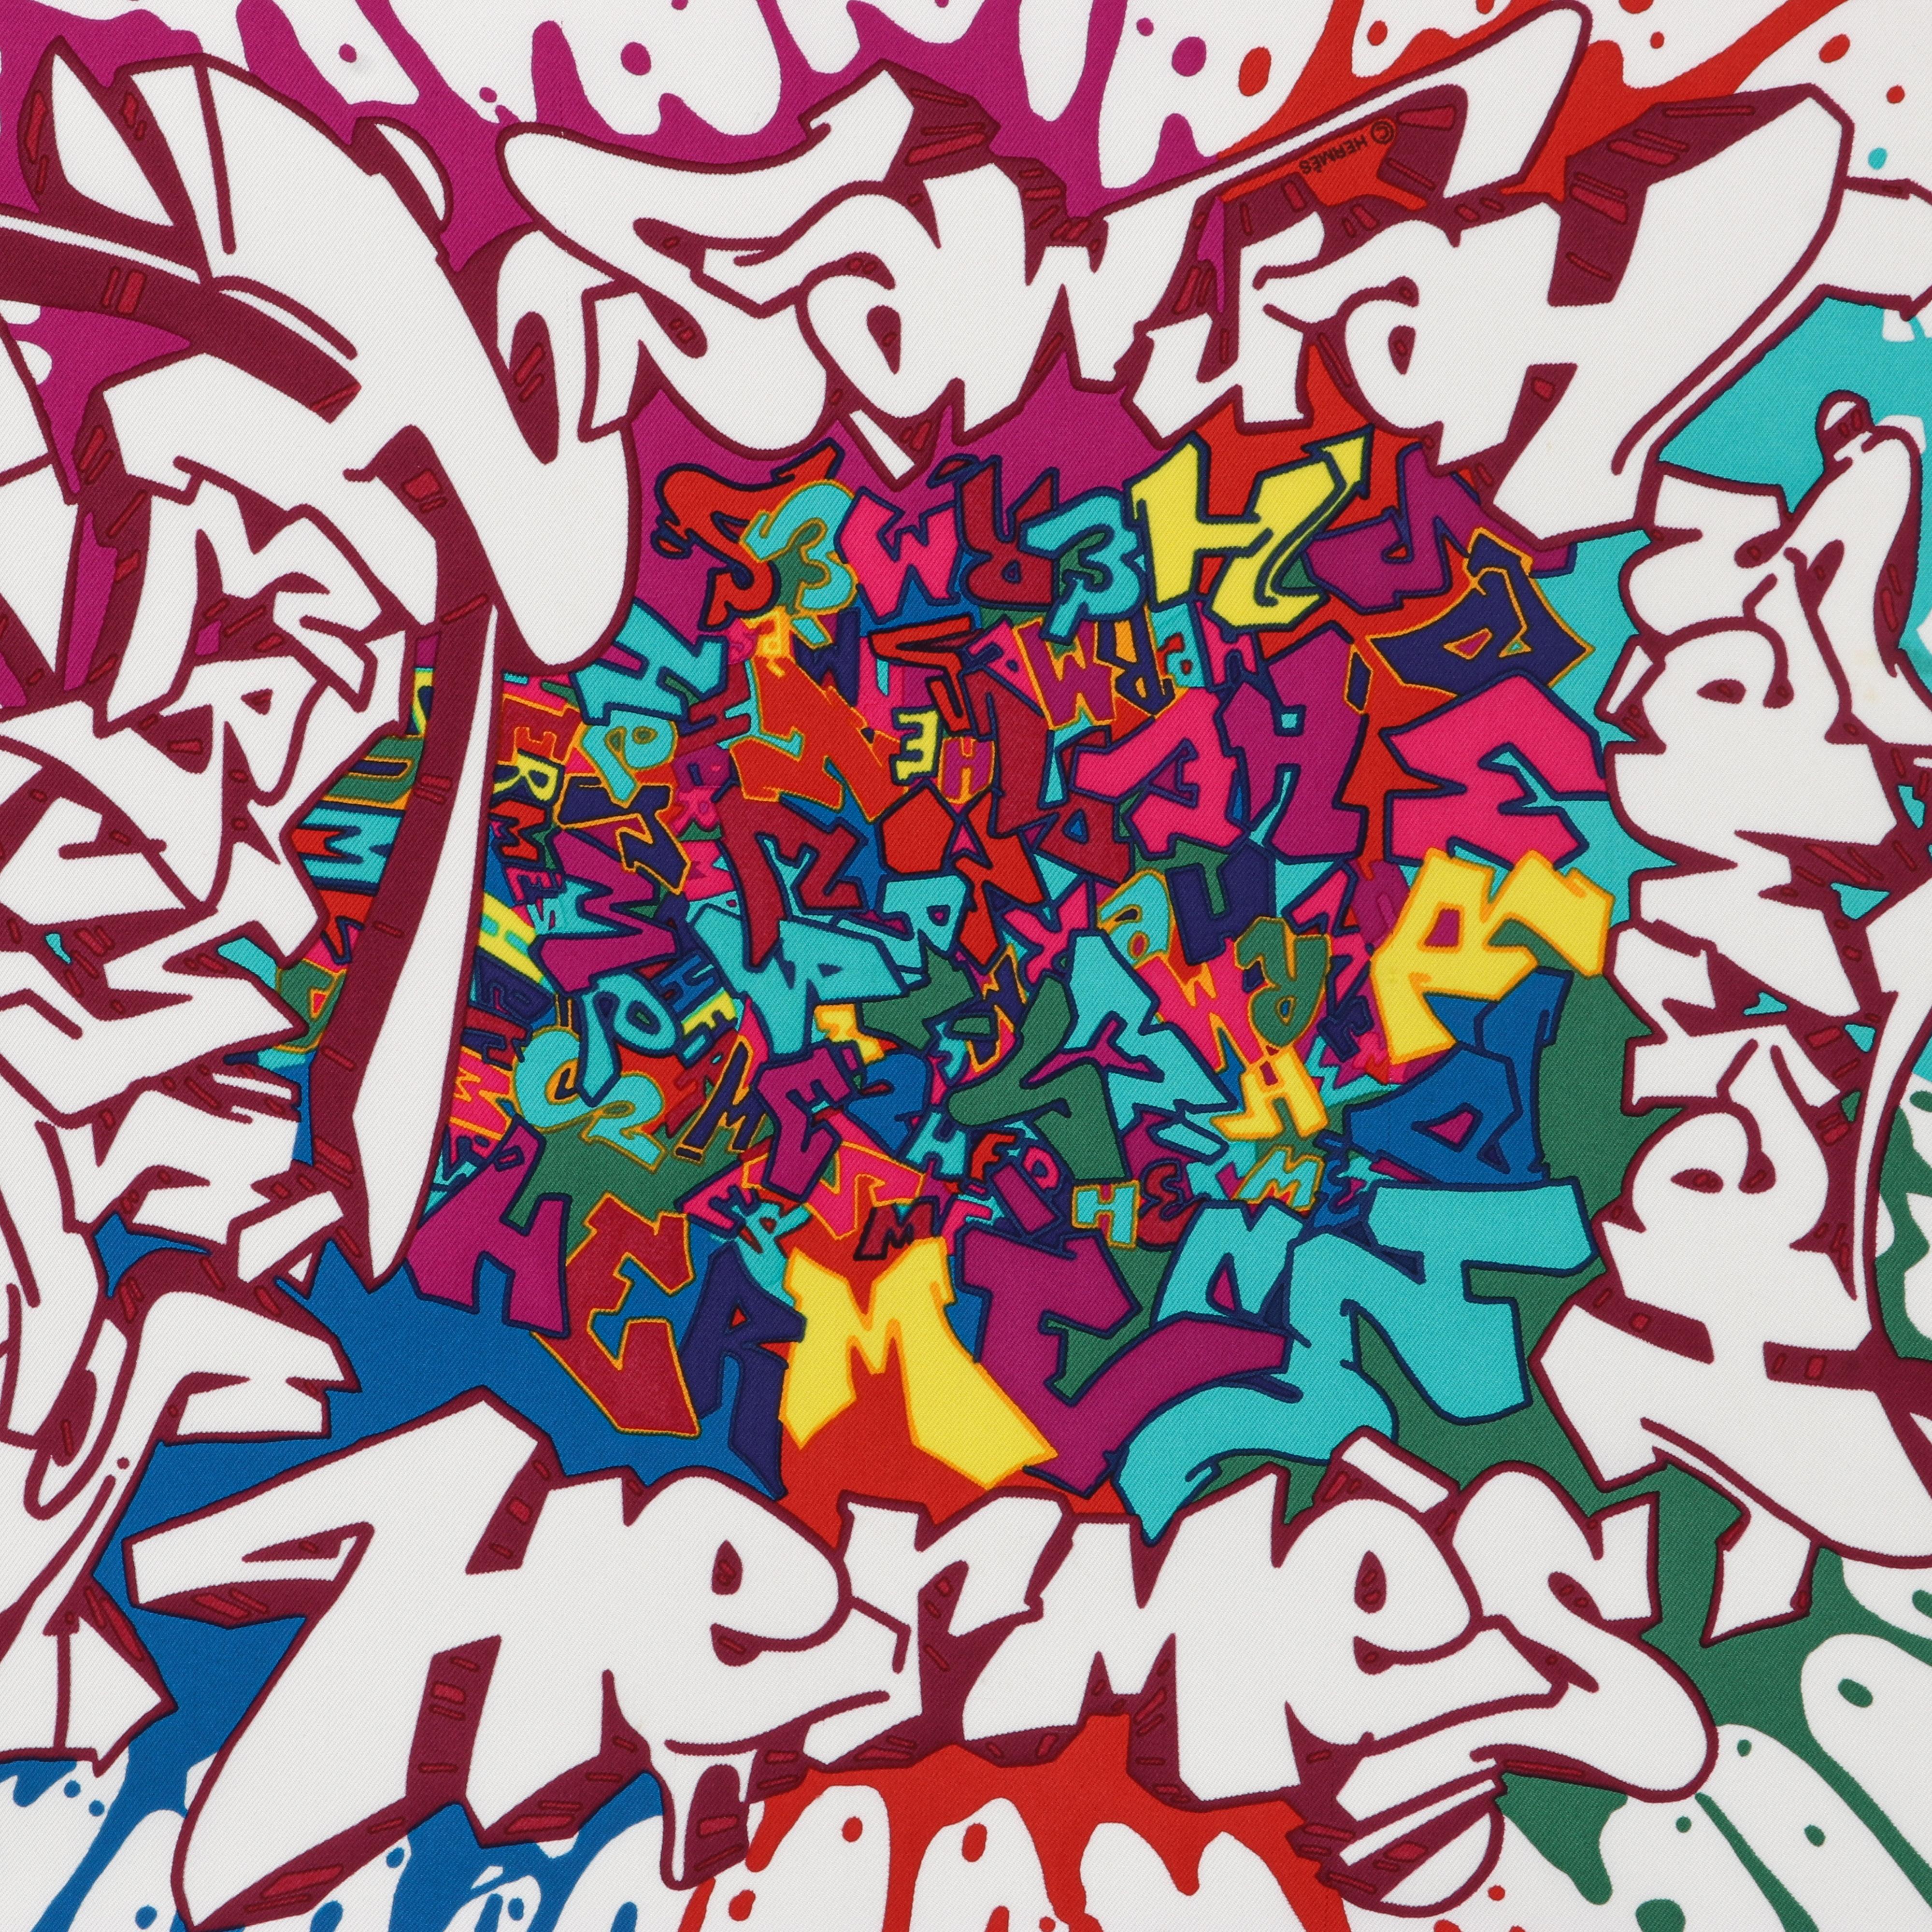 HERMES c.2011 Cyril Phan Kongo “Graff” Multicolor Graffiti Art Silk Scarf w/Box 
 
Brand/Manufacturer: Hermes
Circa: 2011
Designer: Cyril Phan “Kongo” 
Style: Square scarf
Color(s): Shades of blue, turquoise, magenta, yellow, orange, pink, white,